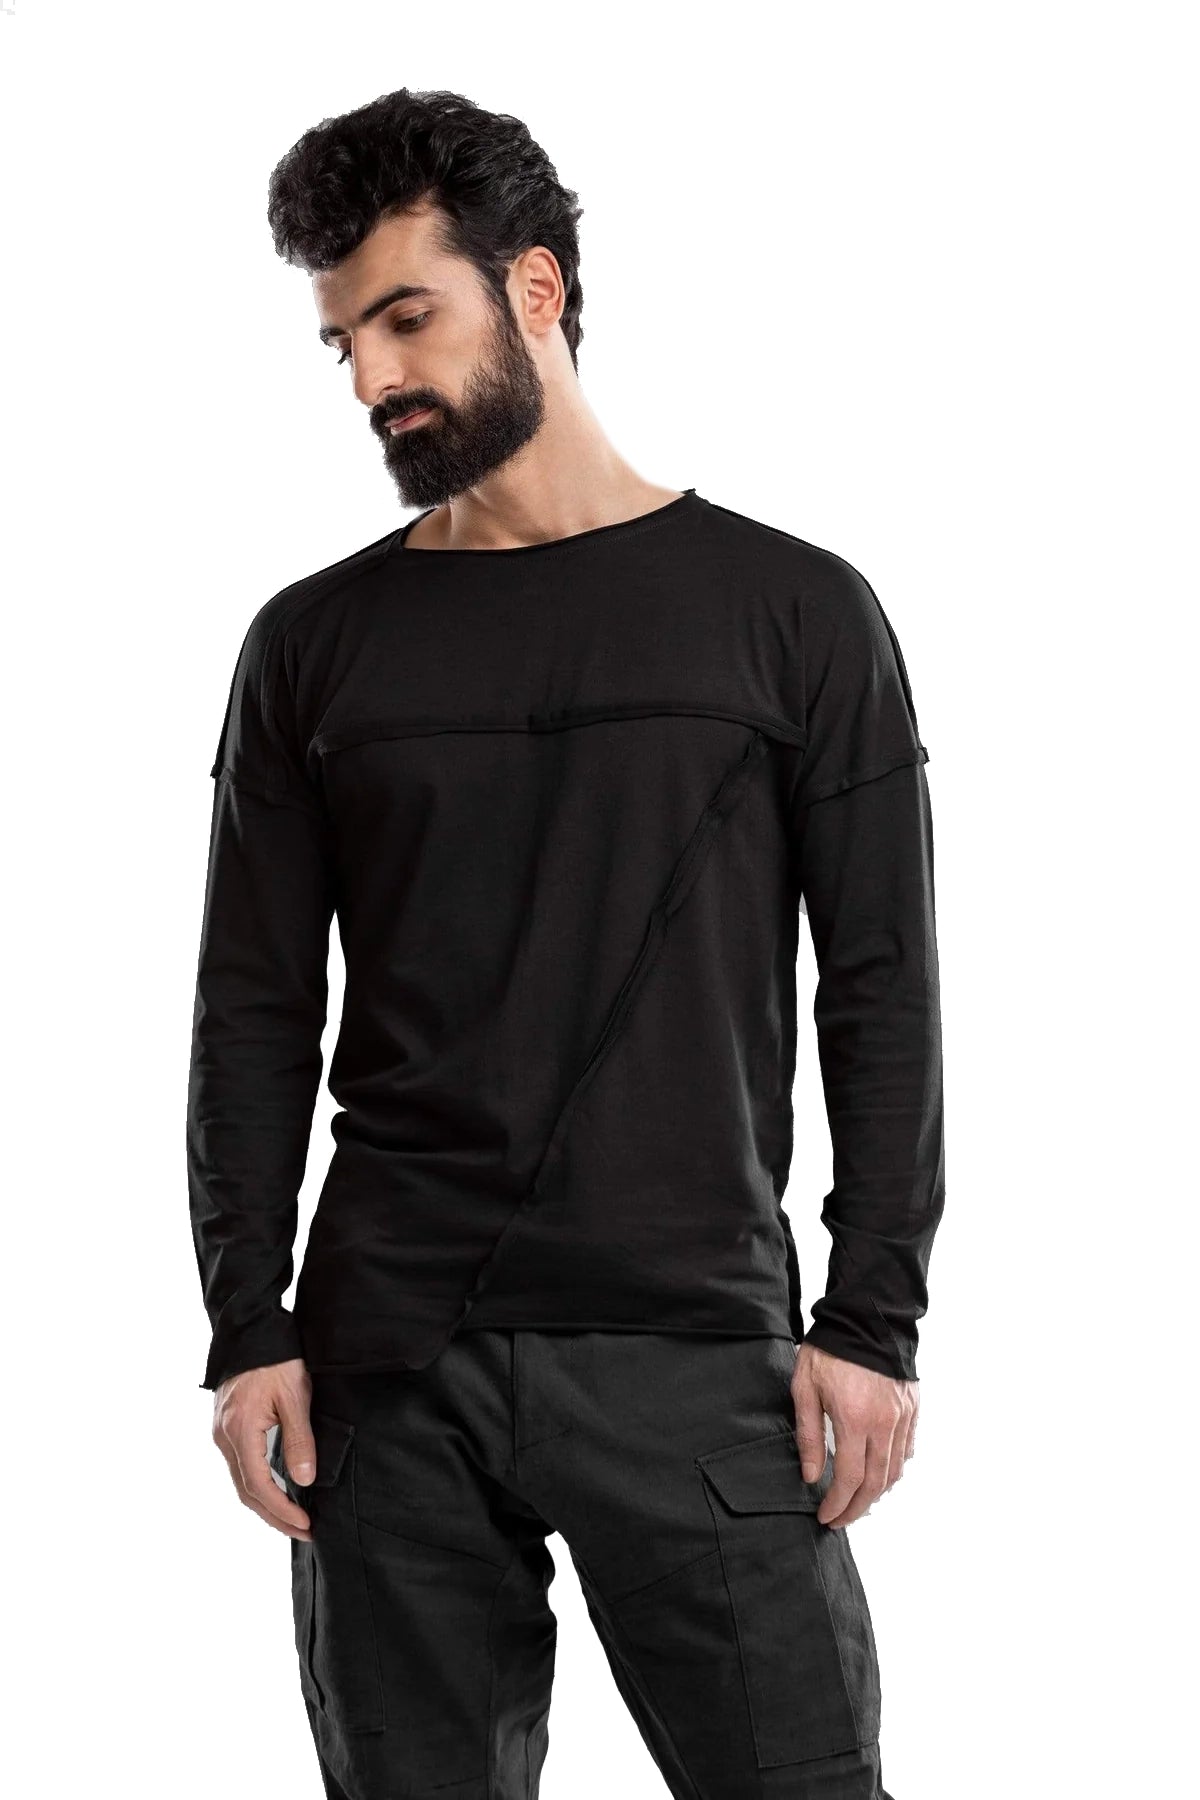 Bundle: Black, Beige & Khaki Long Sleeve T-shirt